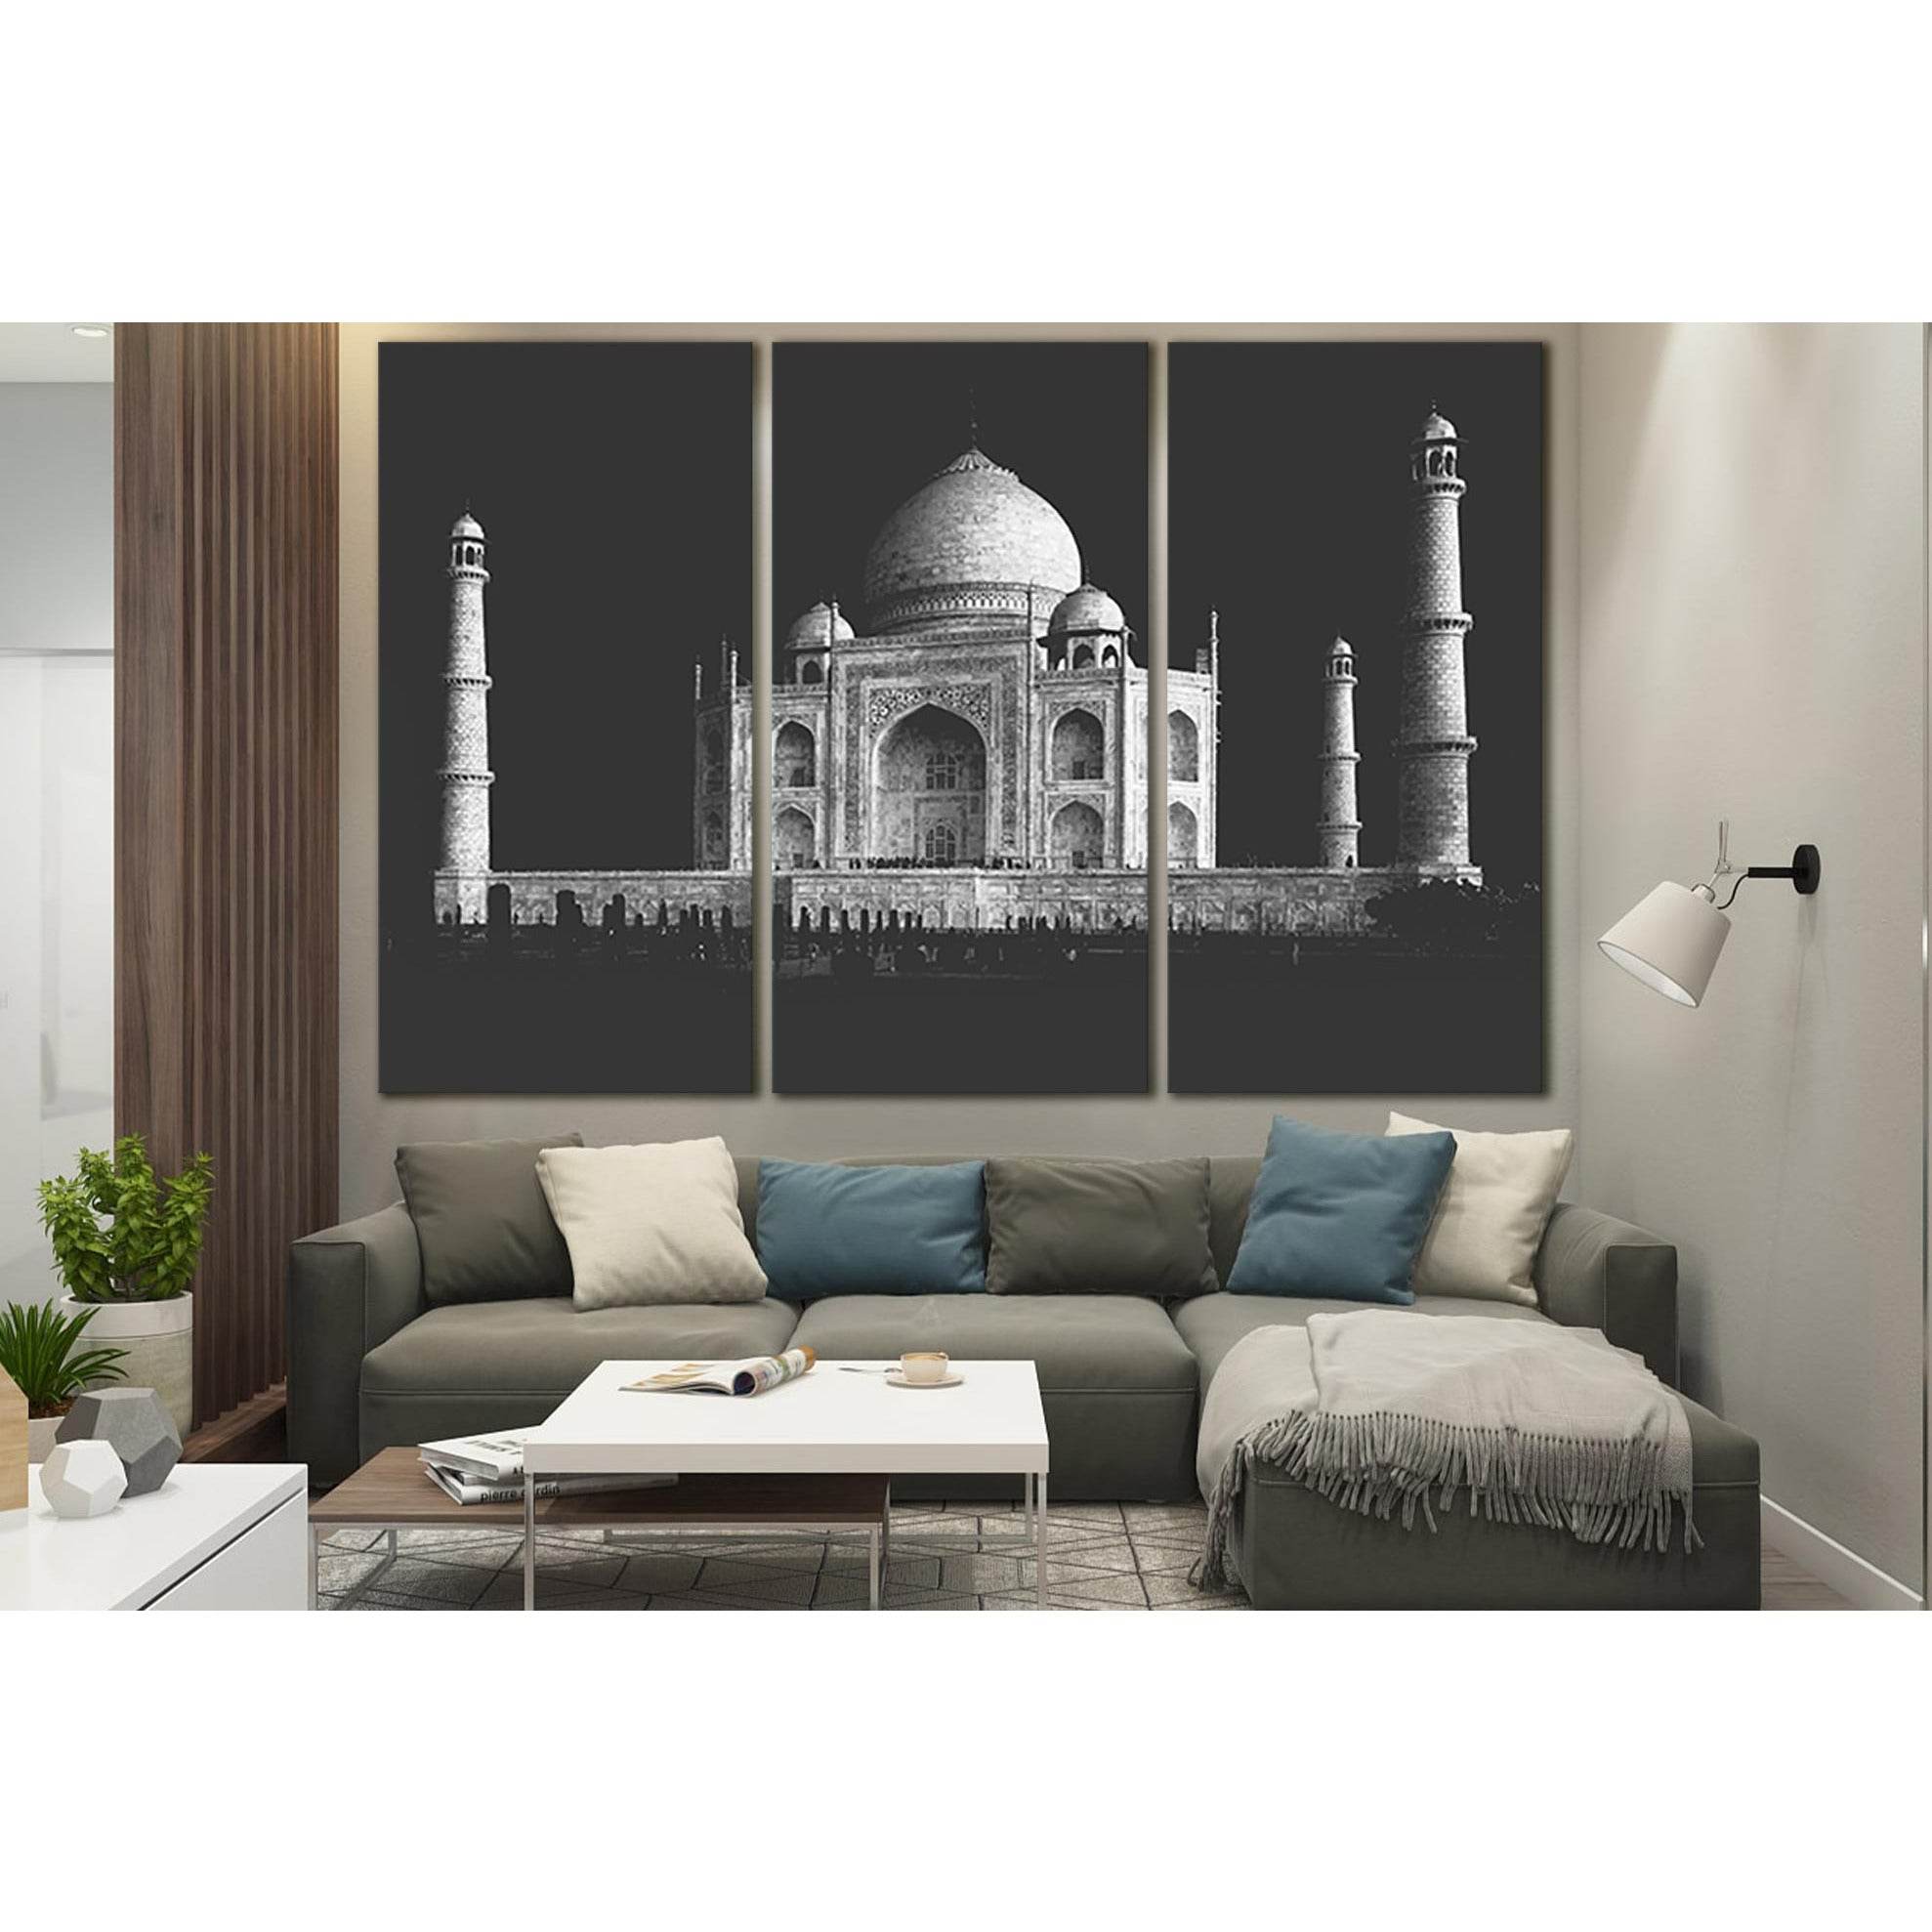 Taj Mahal Black and White №SL1389 Ready to Hang Canvas Print